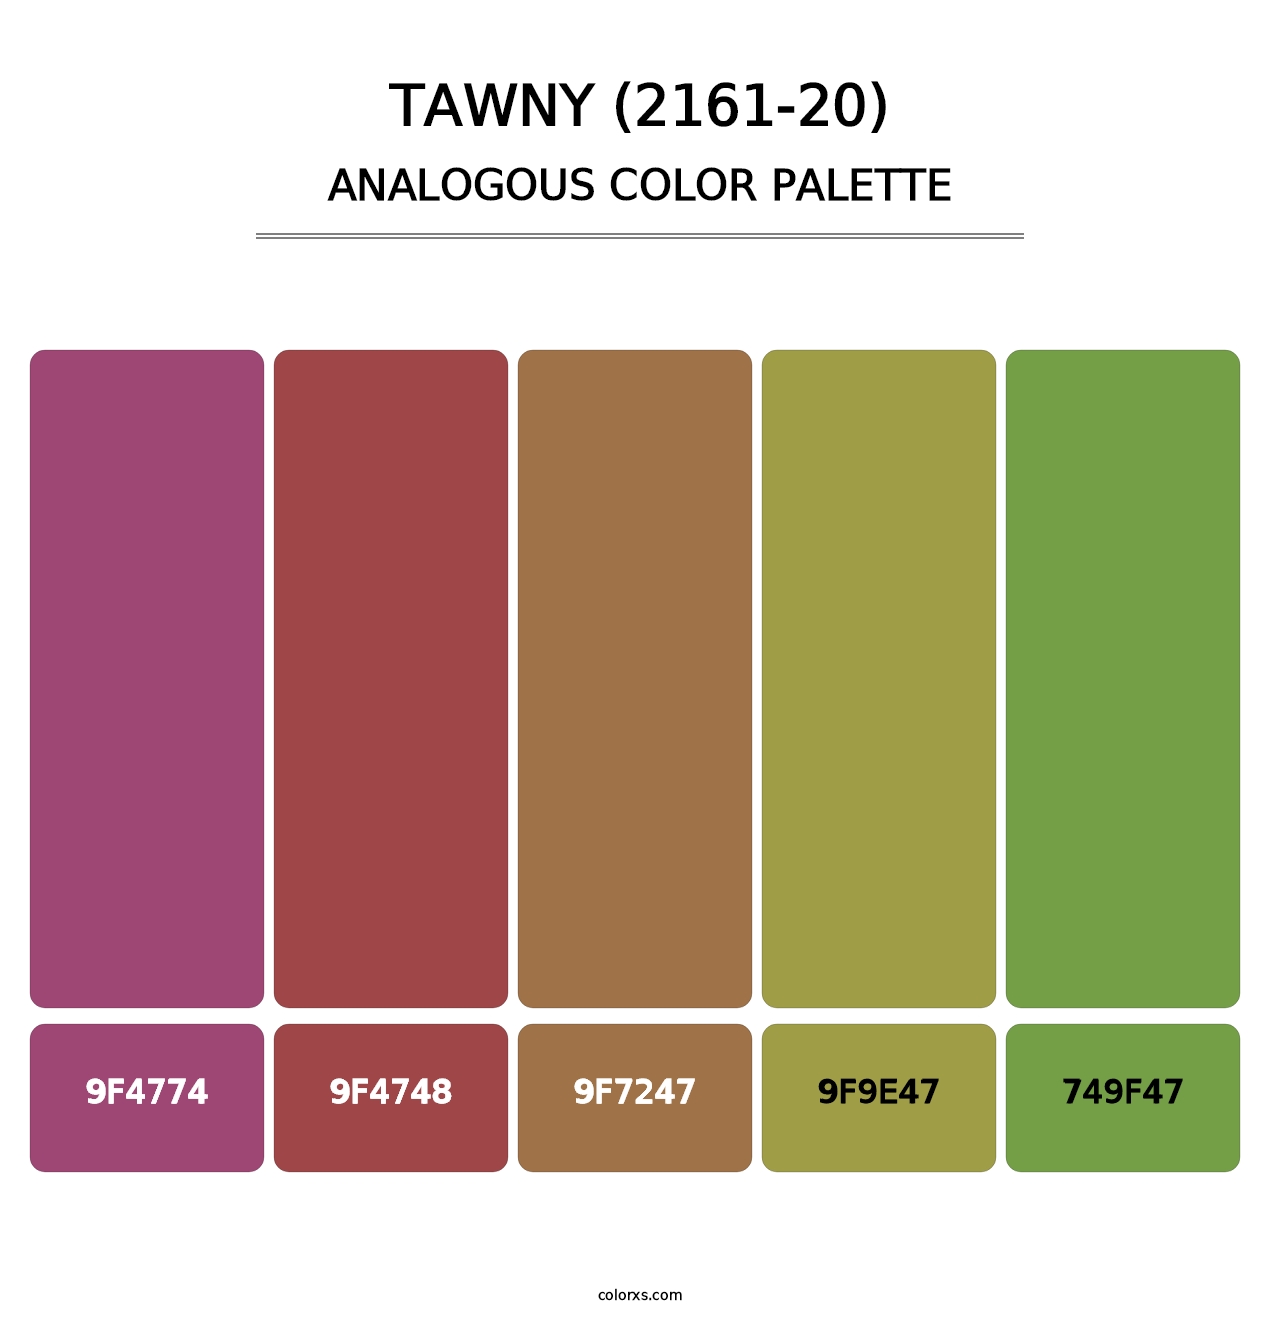 Tawny (2161-20) - Analogous Color Palette